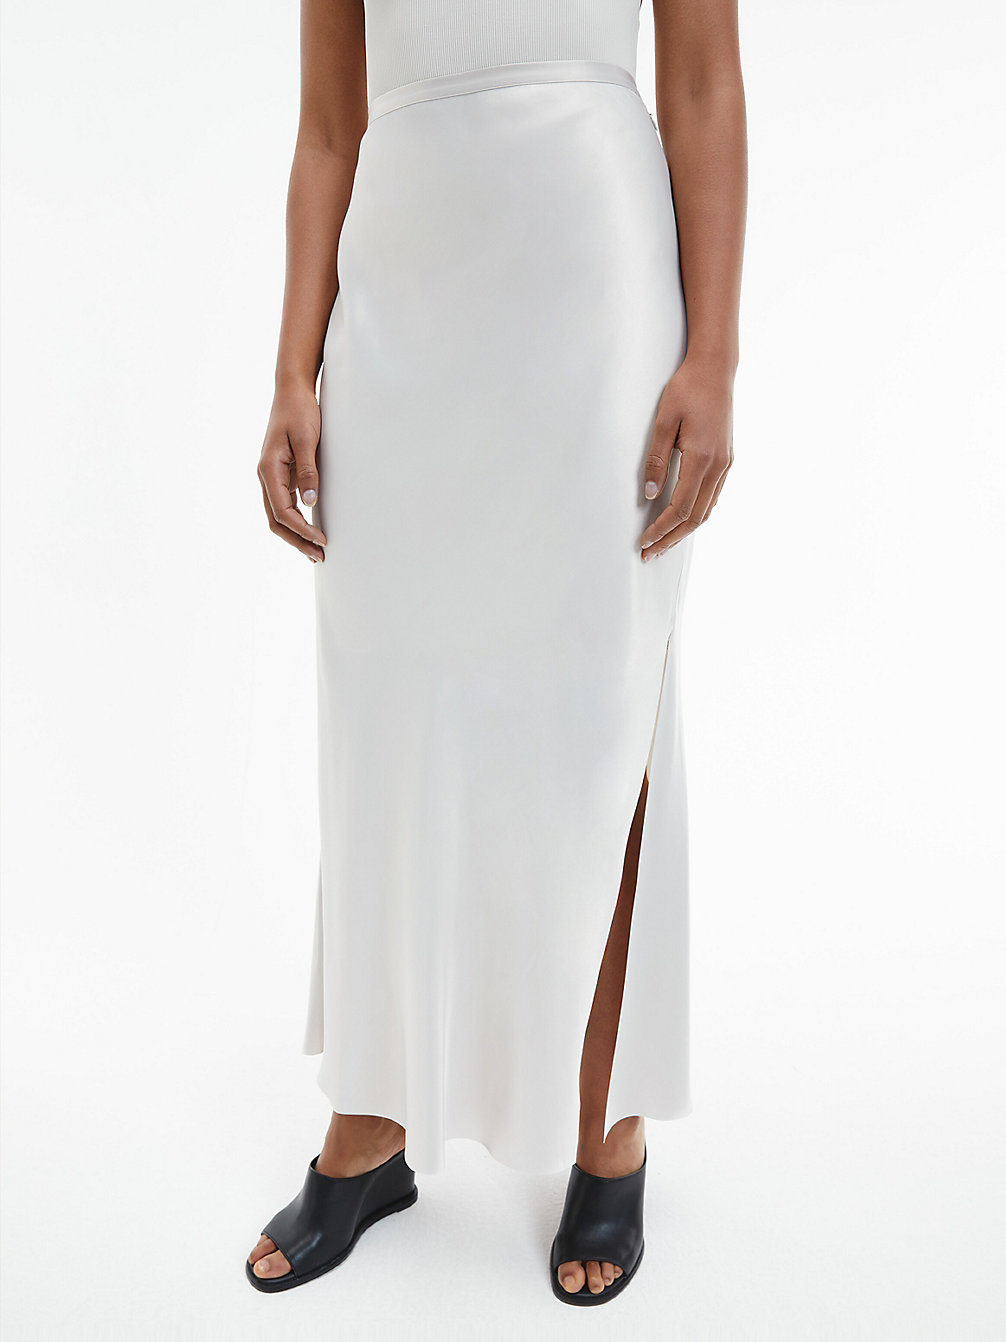 STONY BEIGE Shiny Satin Maxi Skirt undefined women Calvin Klein